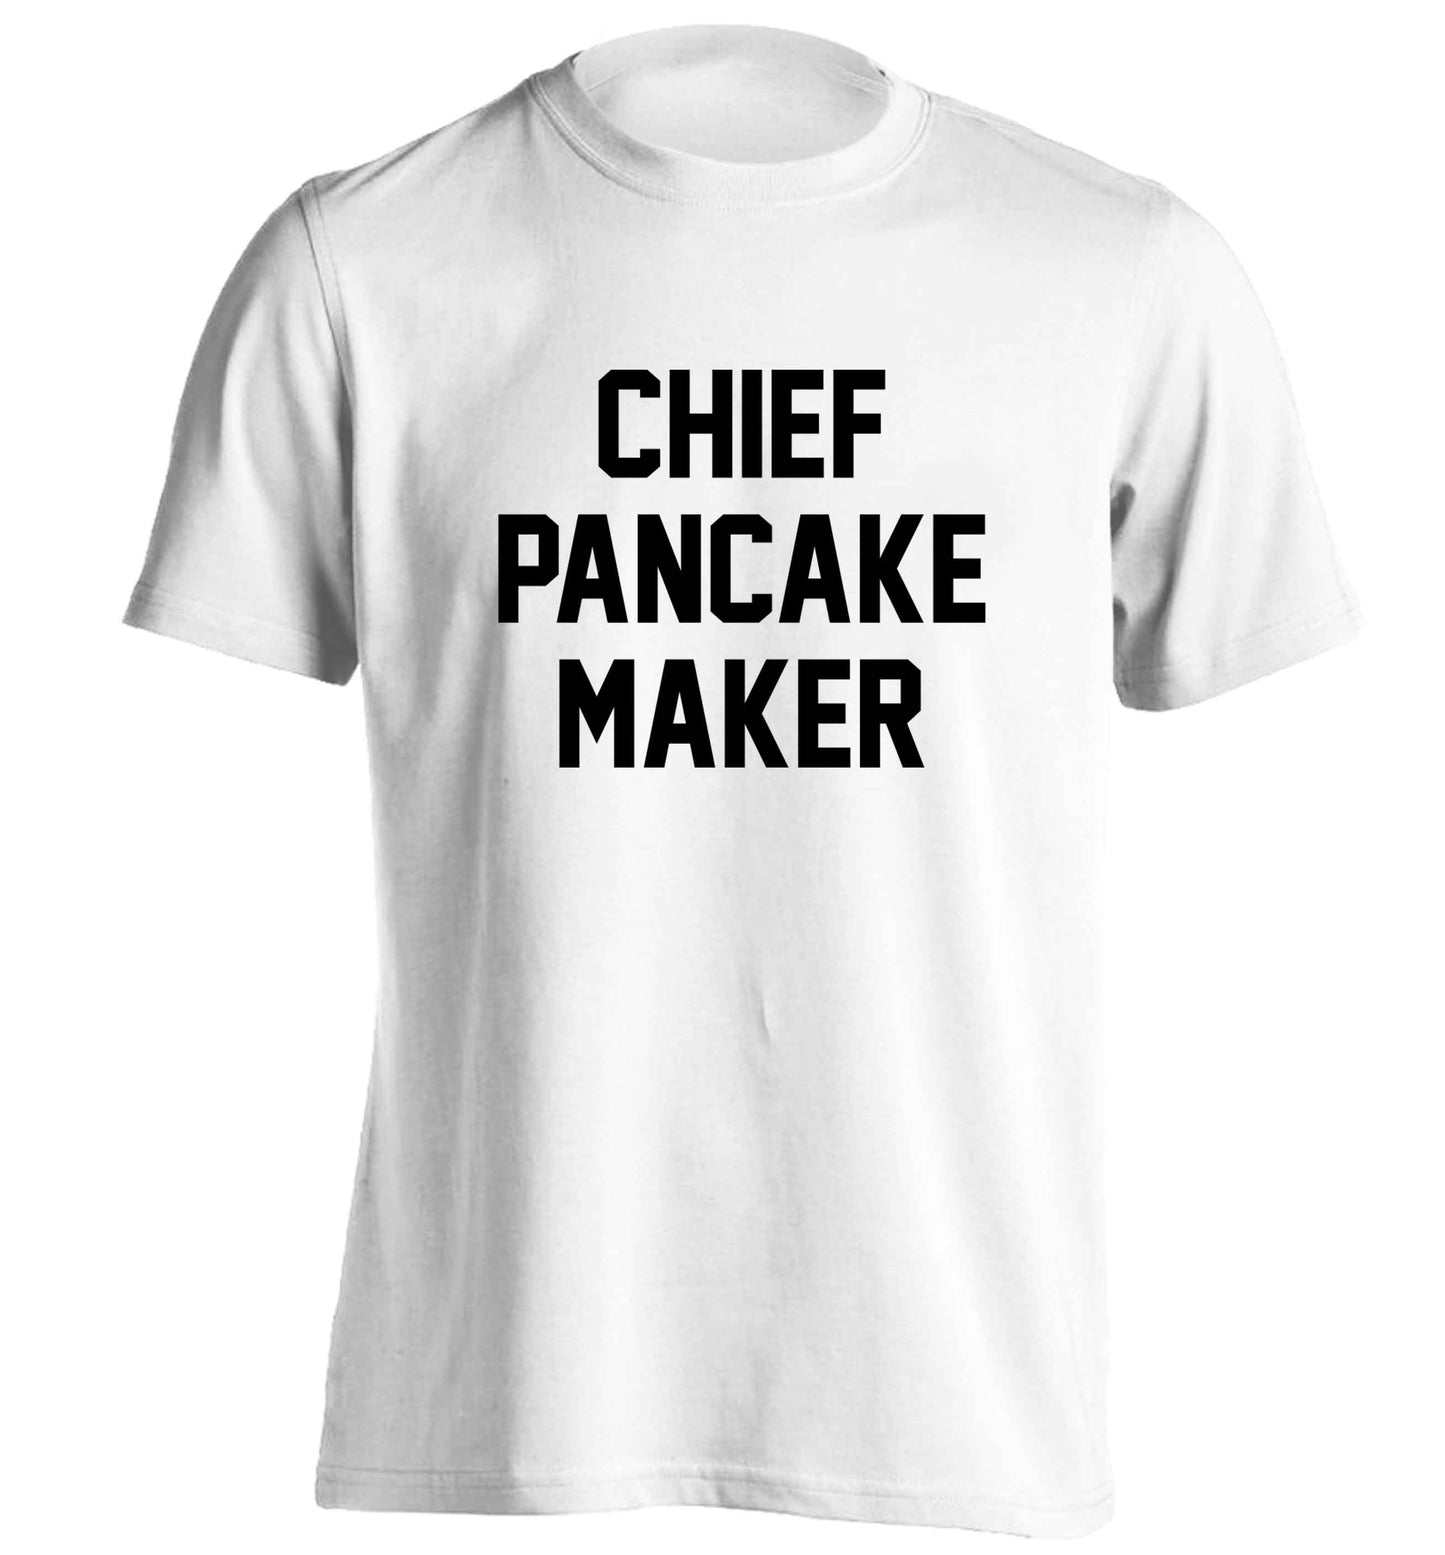 Chief pancake maker adults unisex white Tshirt 2XL